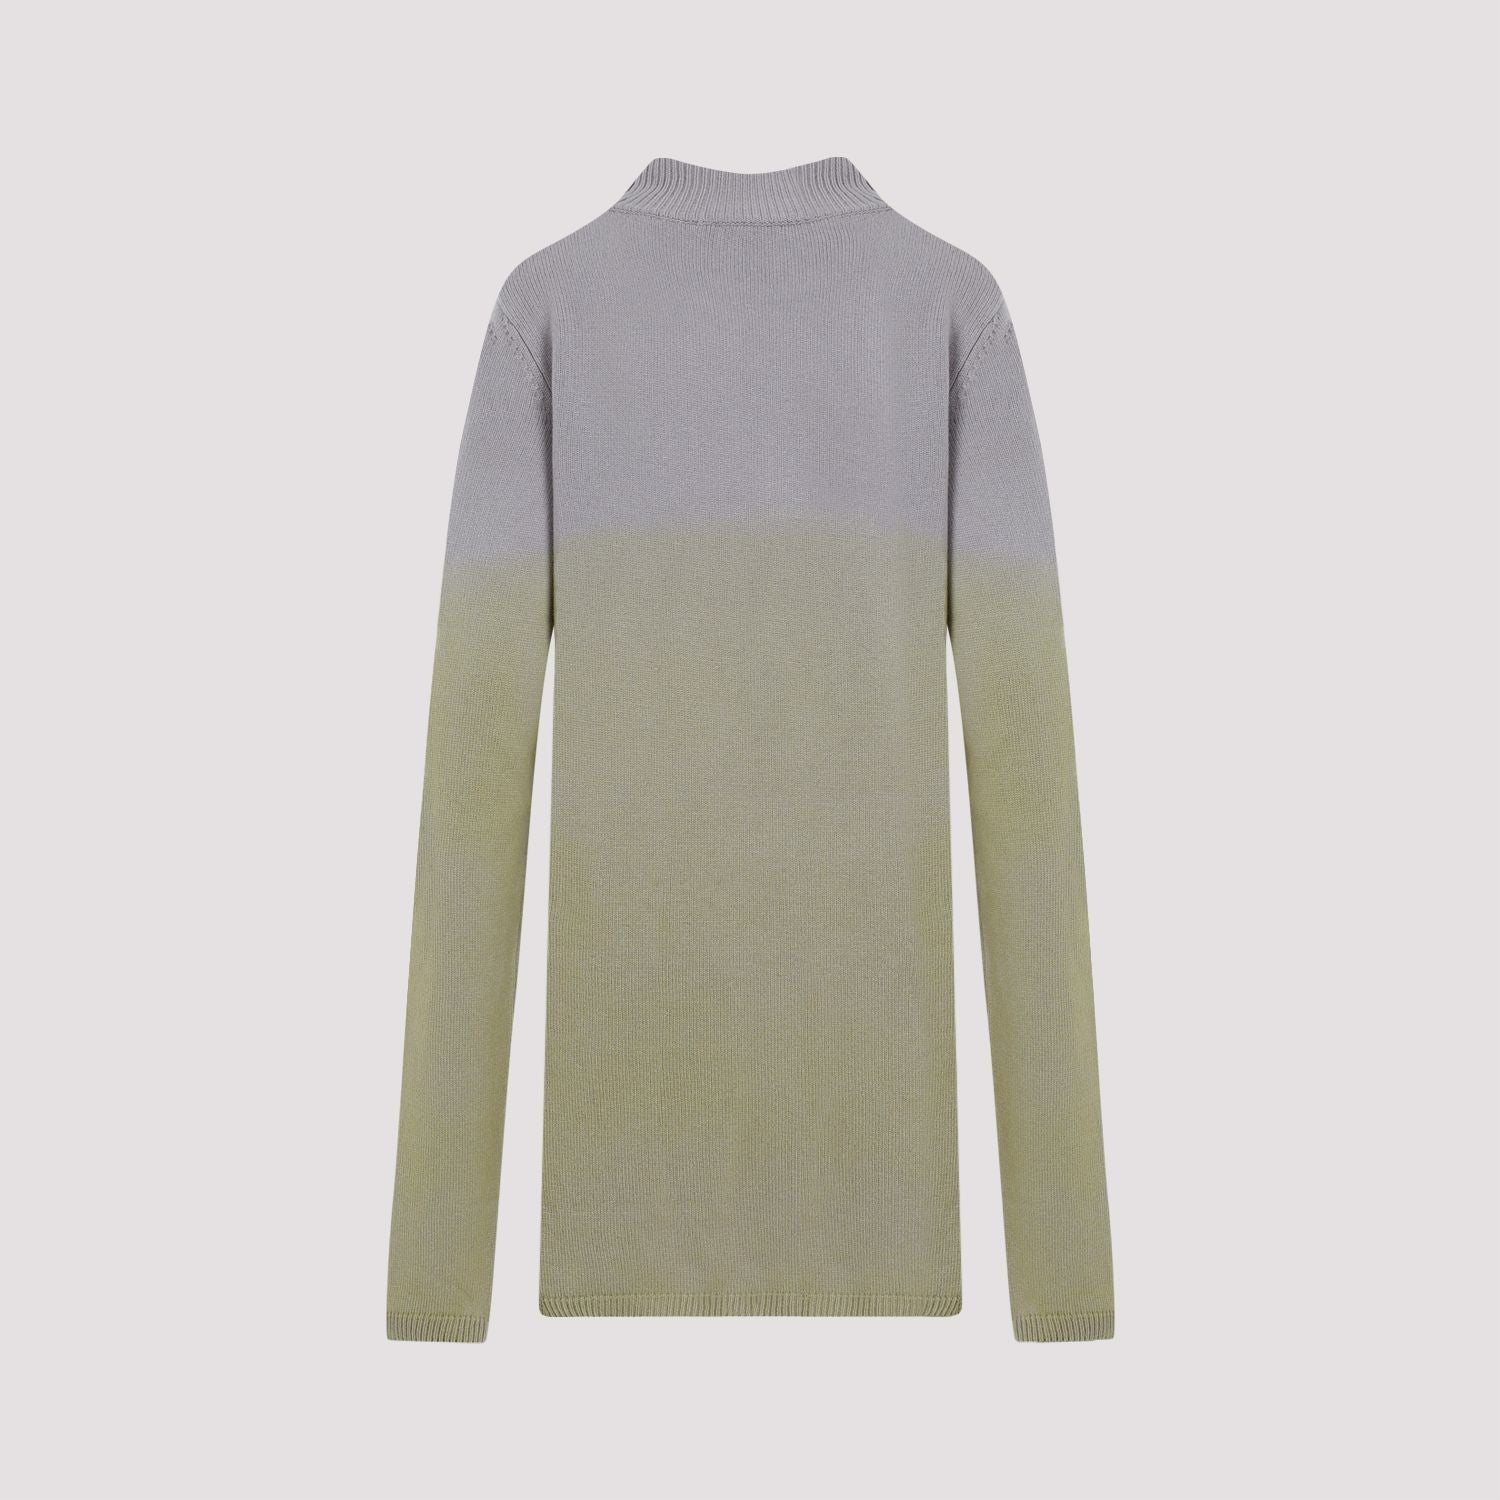 Shop Moncler Genius Subhuman Cashmere Sweatshirt For Women In Grey